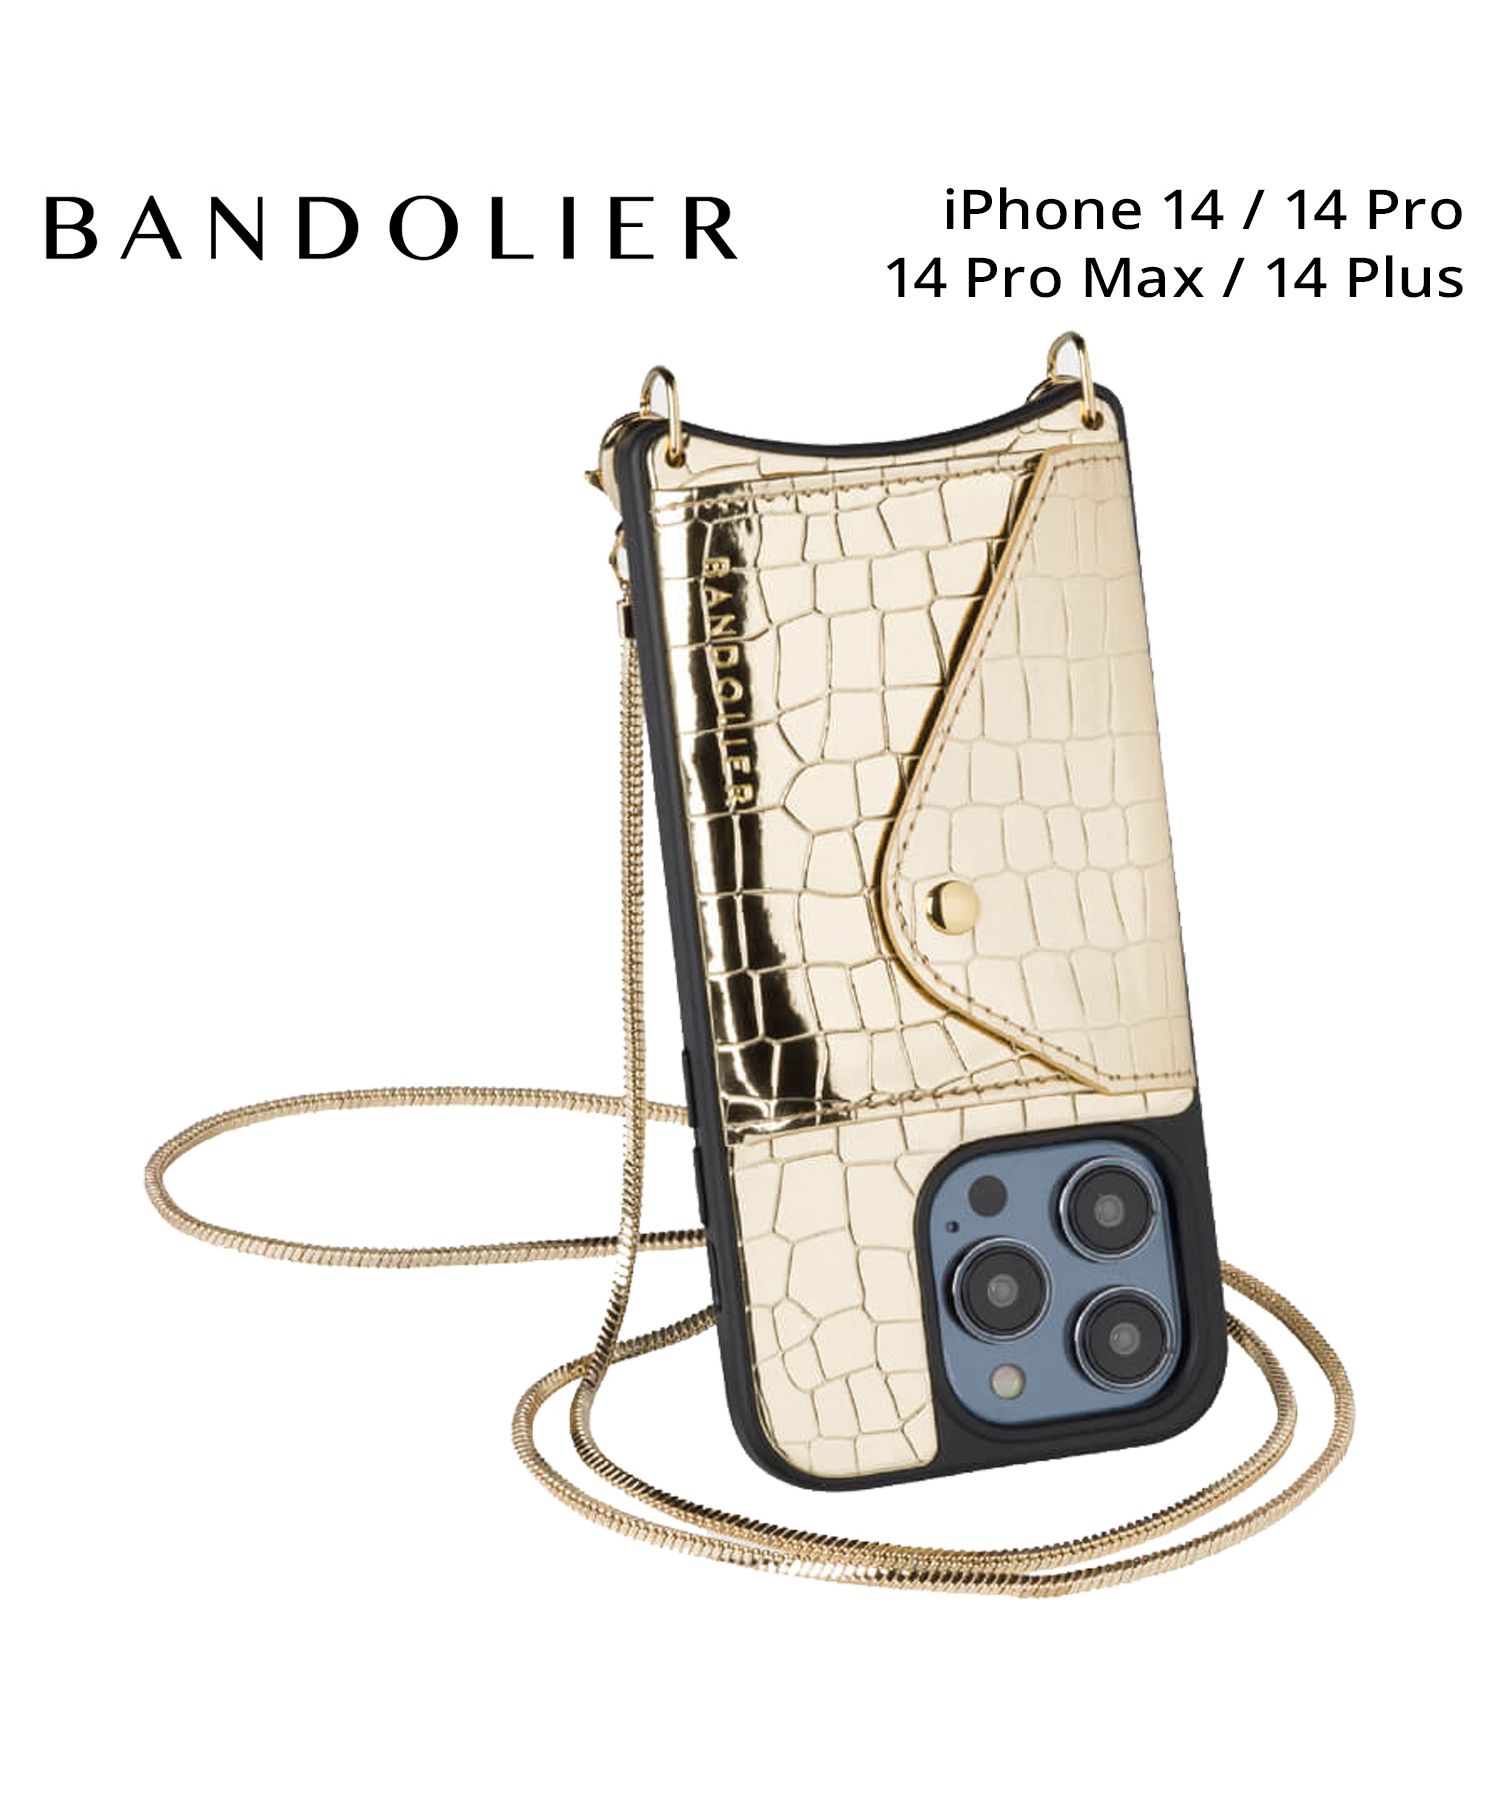 BANDOLIER バンドリヤー iPhone 14 14Pro iPhone 14 Pro Max iPhone 14